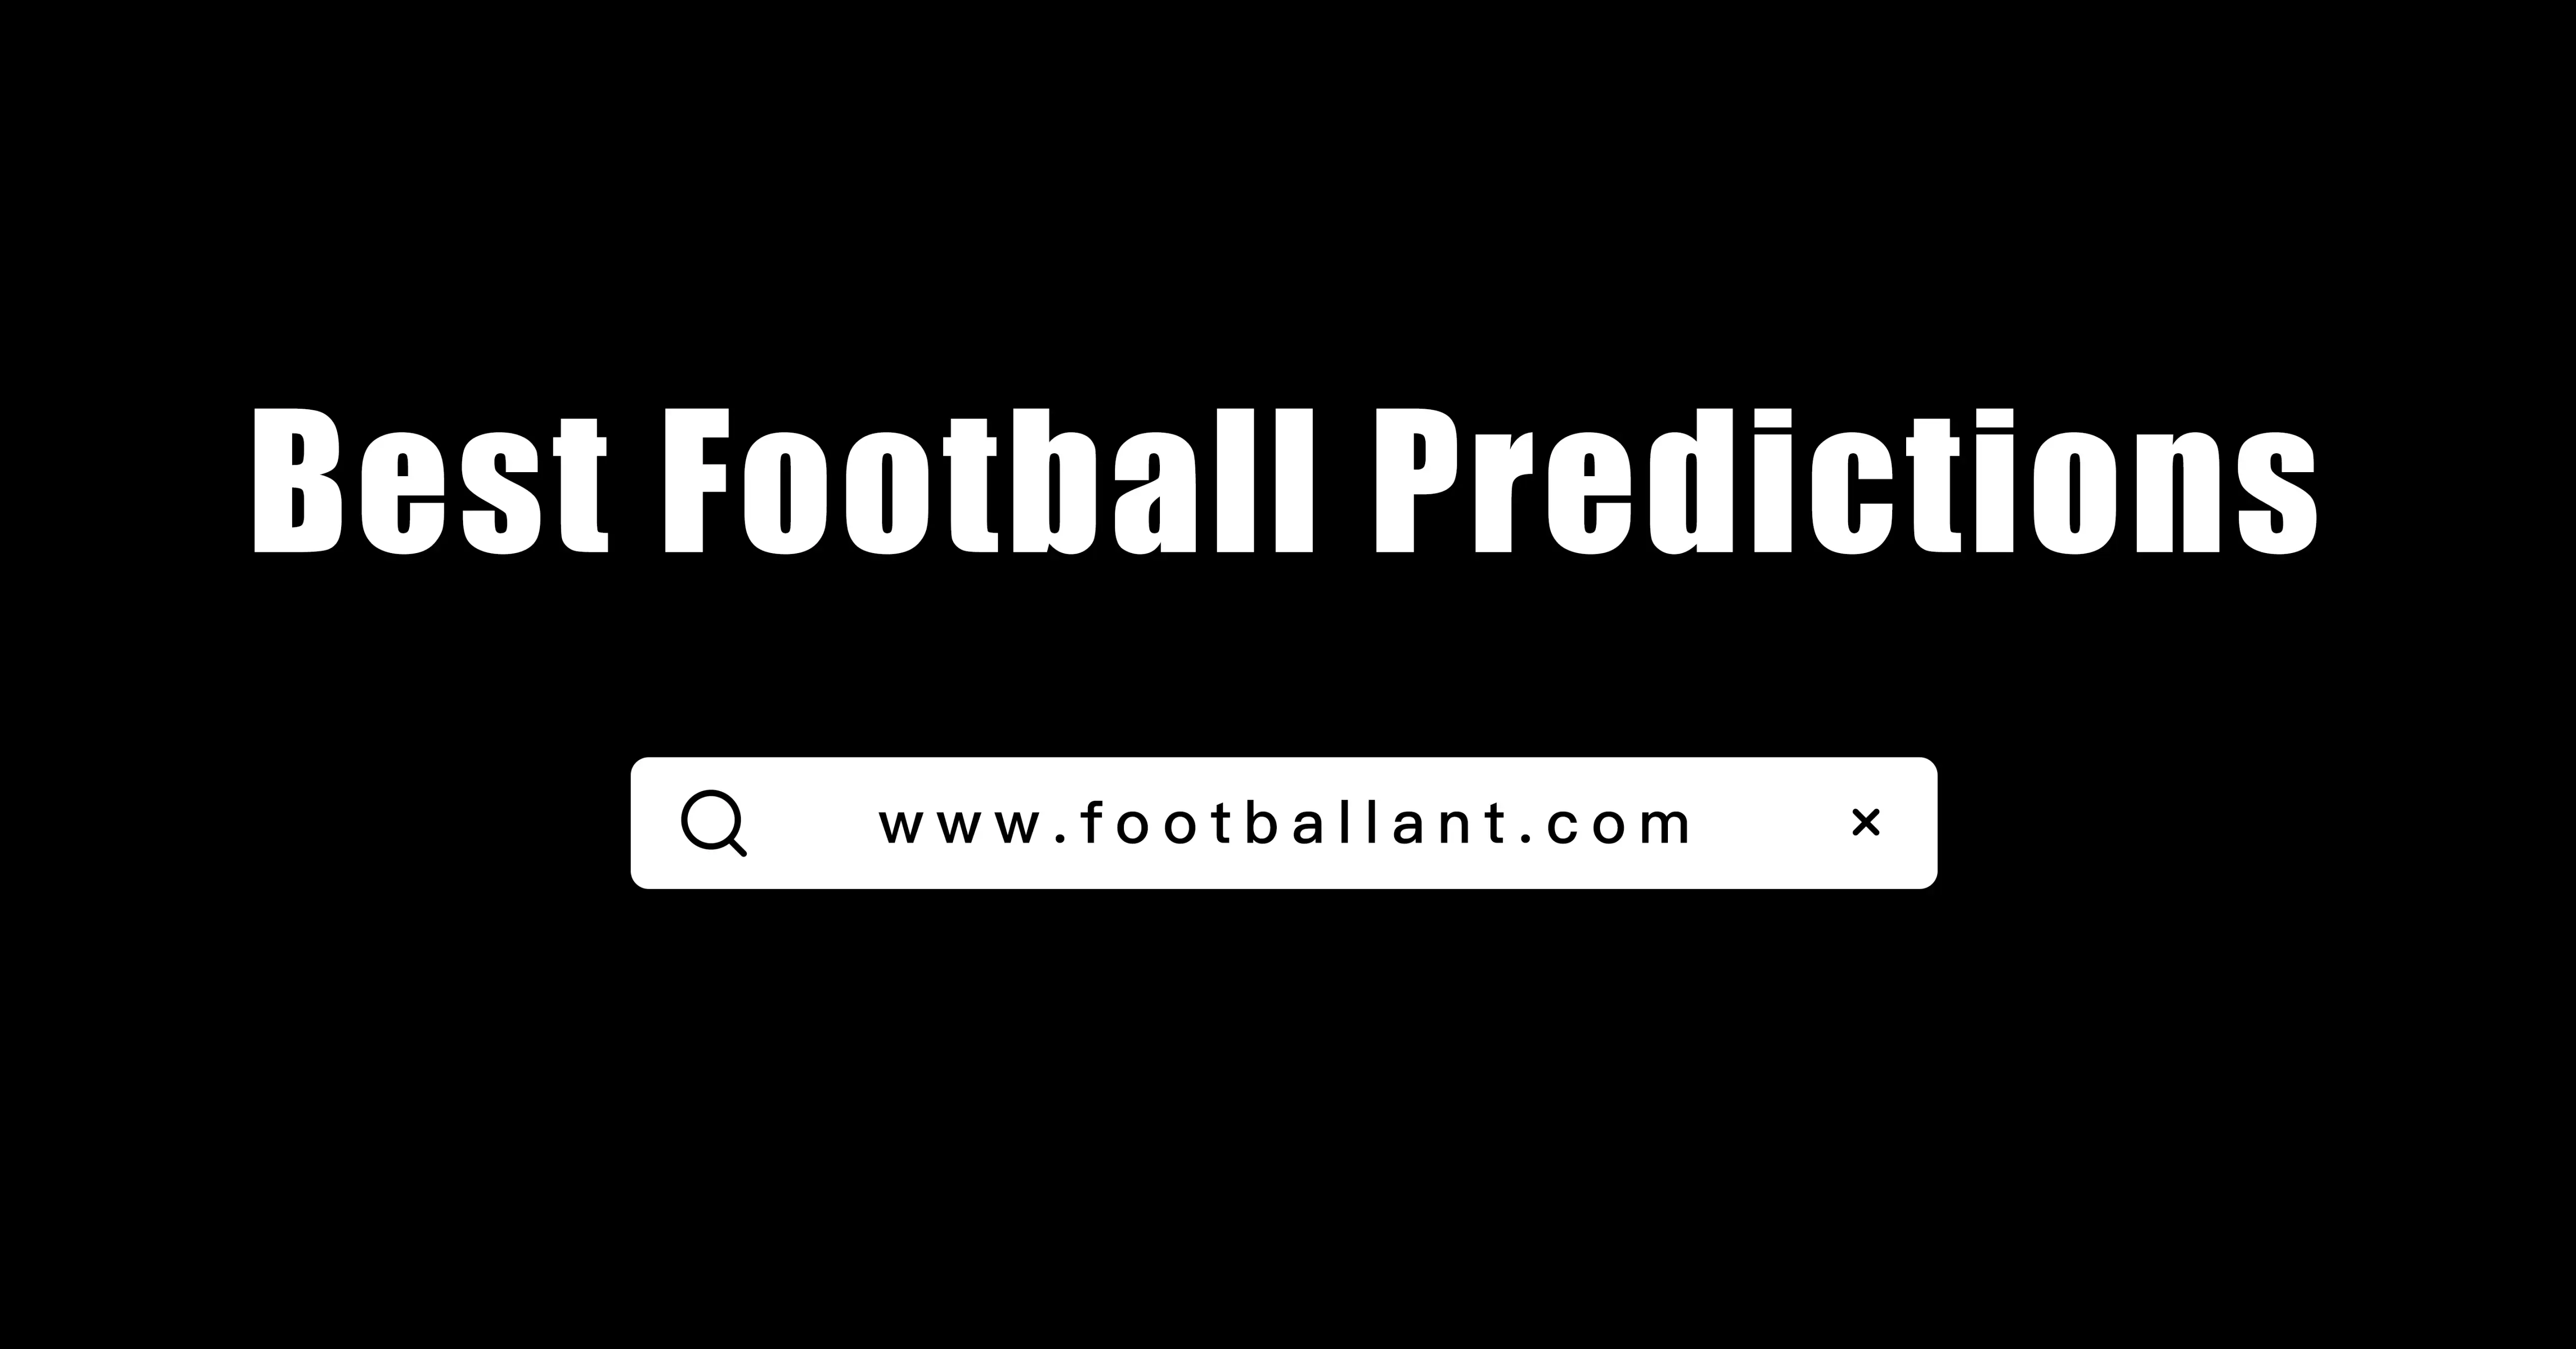 football predictions site.jpg